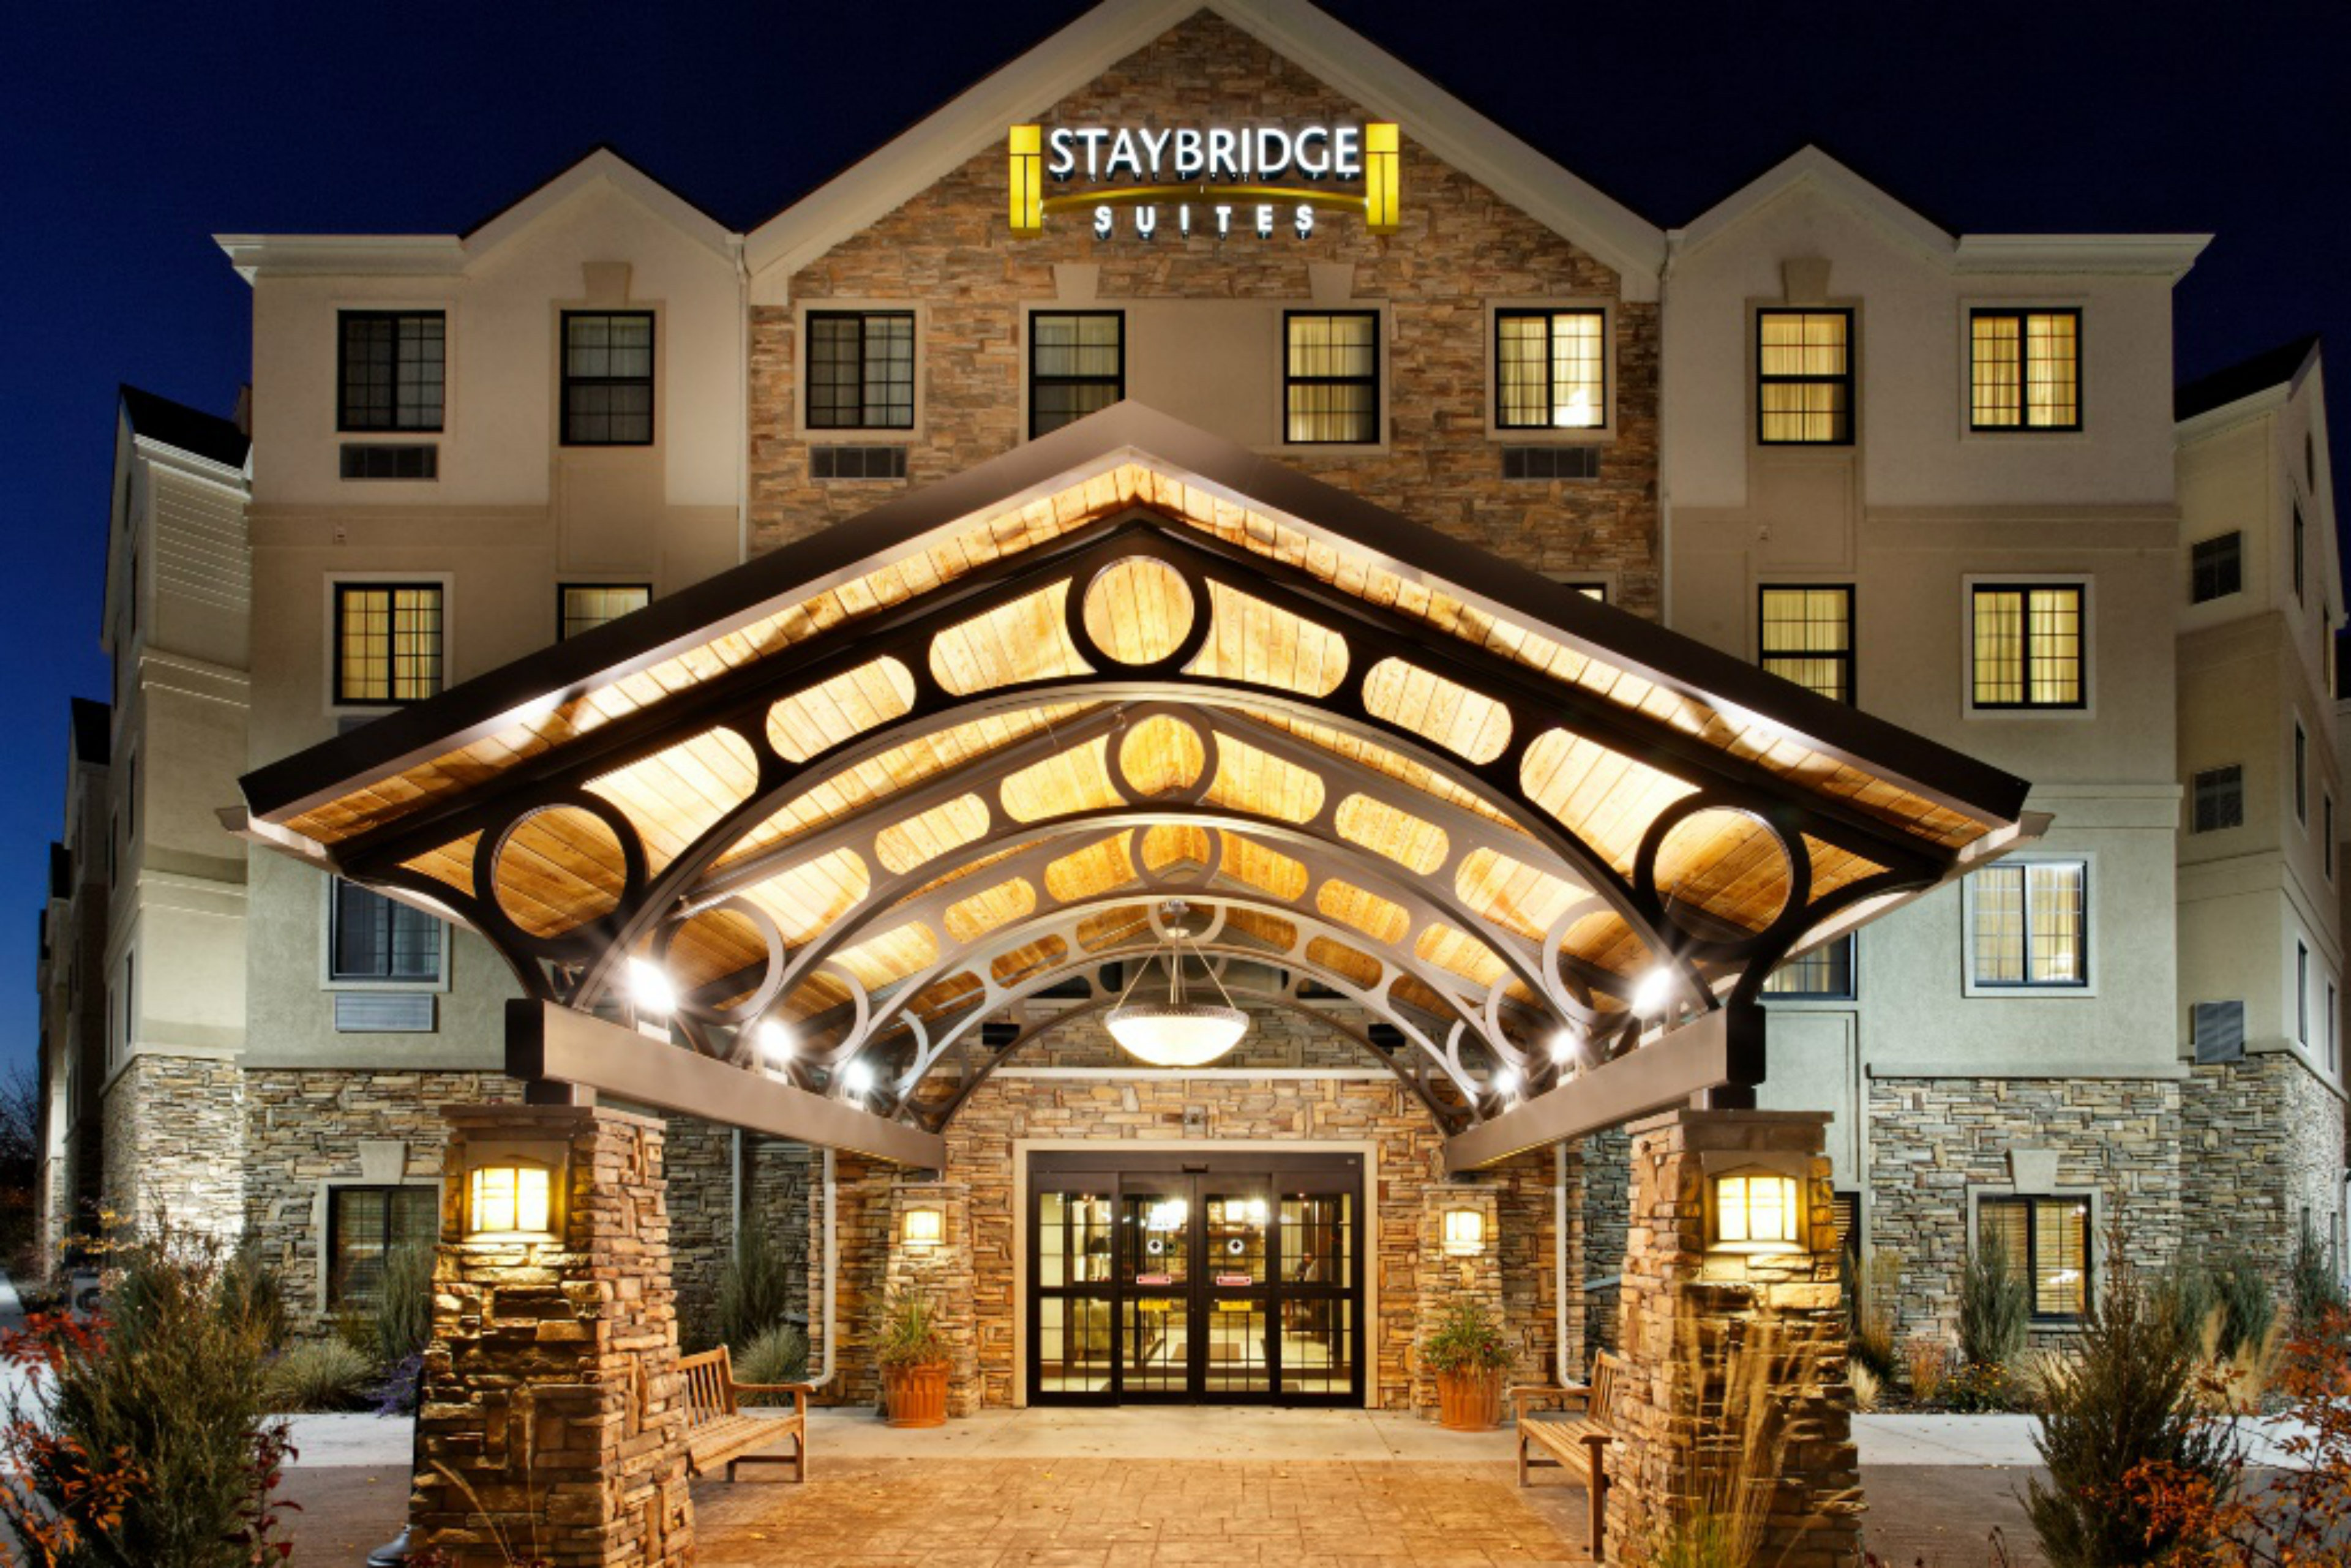 Best extended stay hotel to stay near Nashville, Mount Juliet area